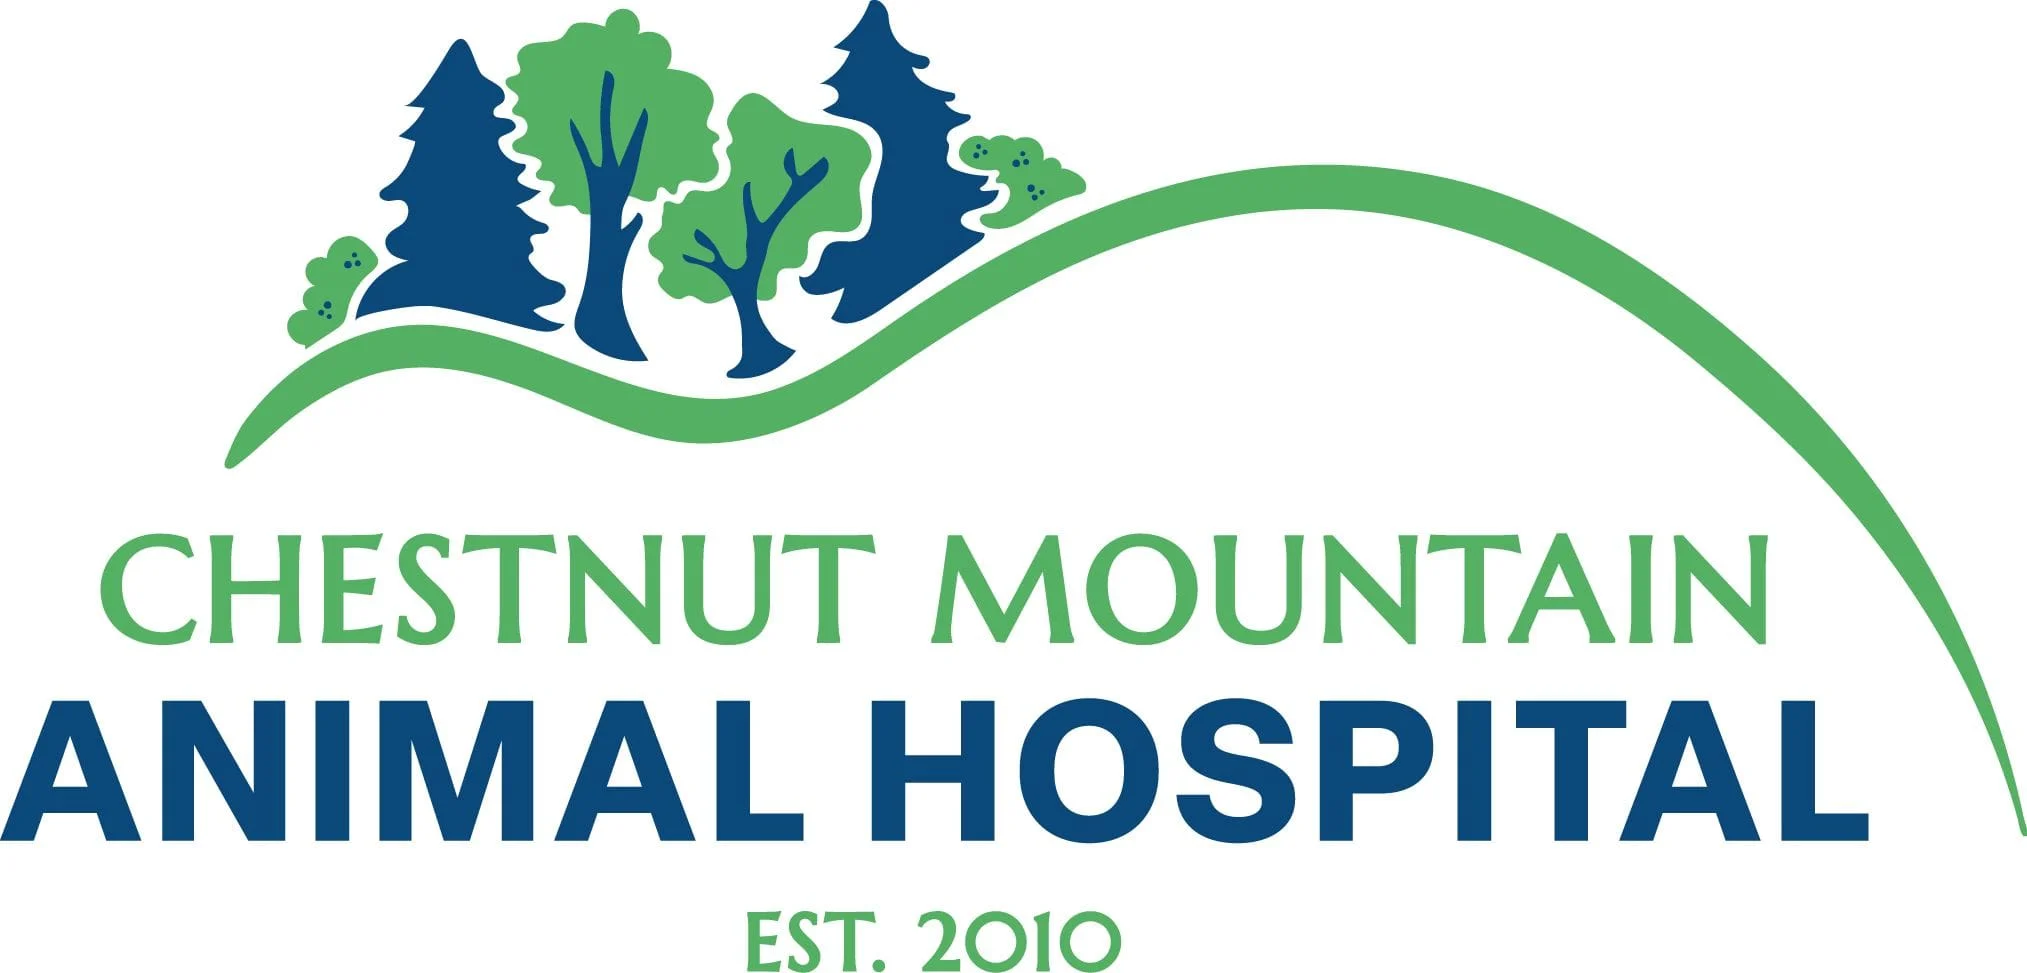 Chestnut Mountain Animal Hospital